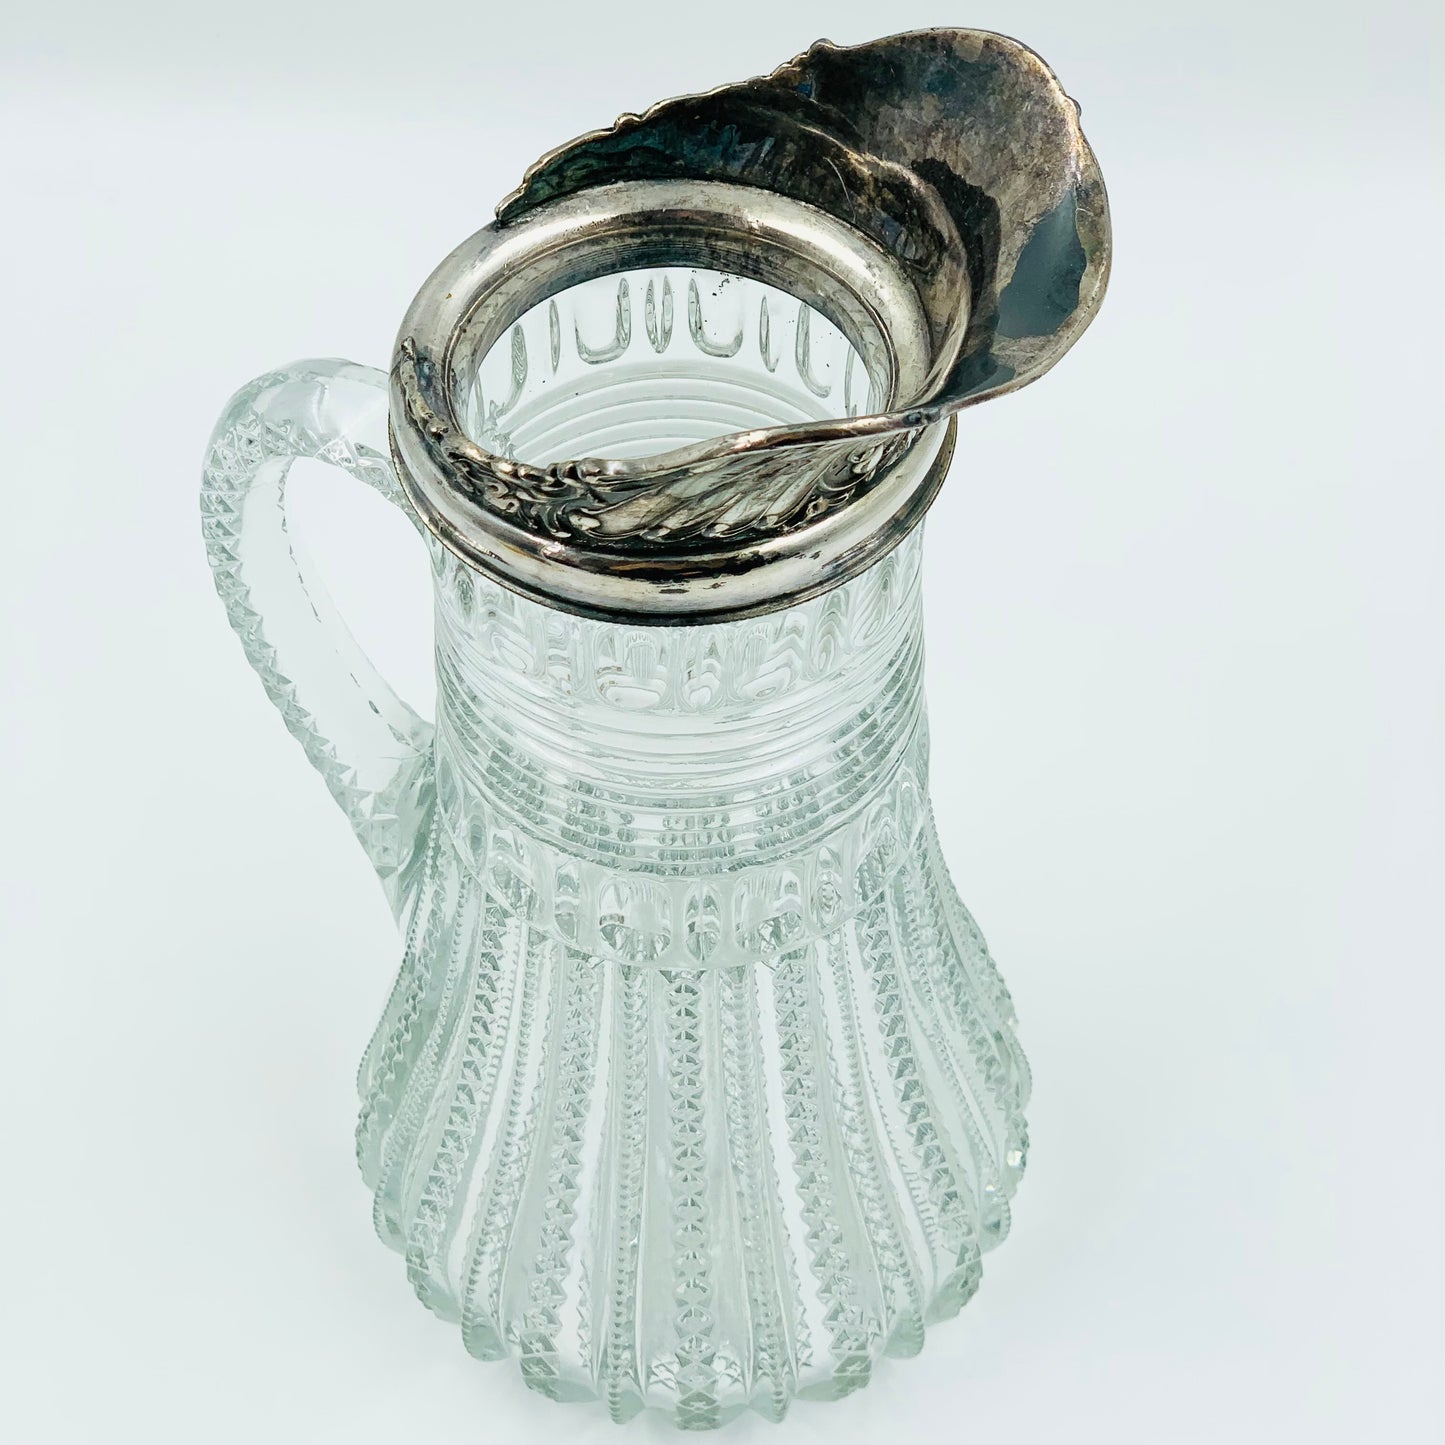 Antique pressed glass jug